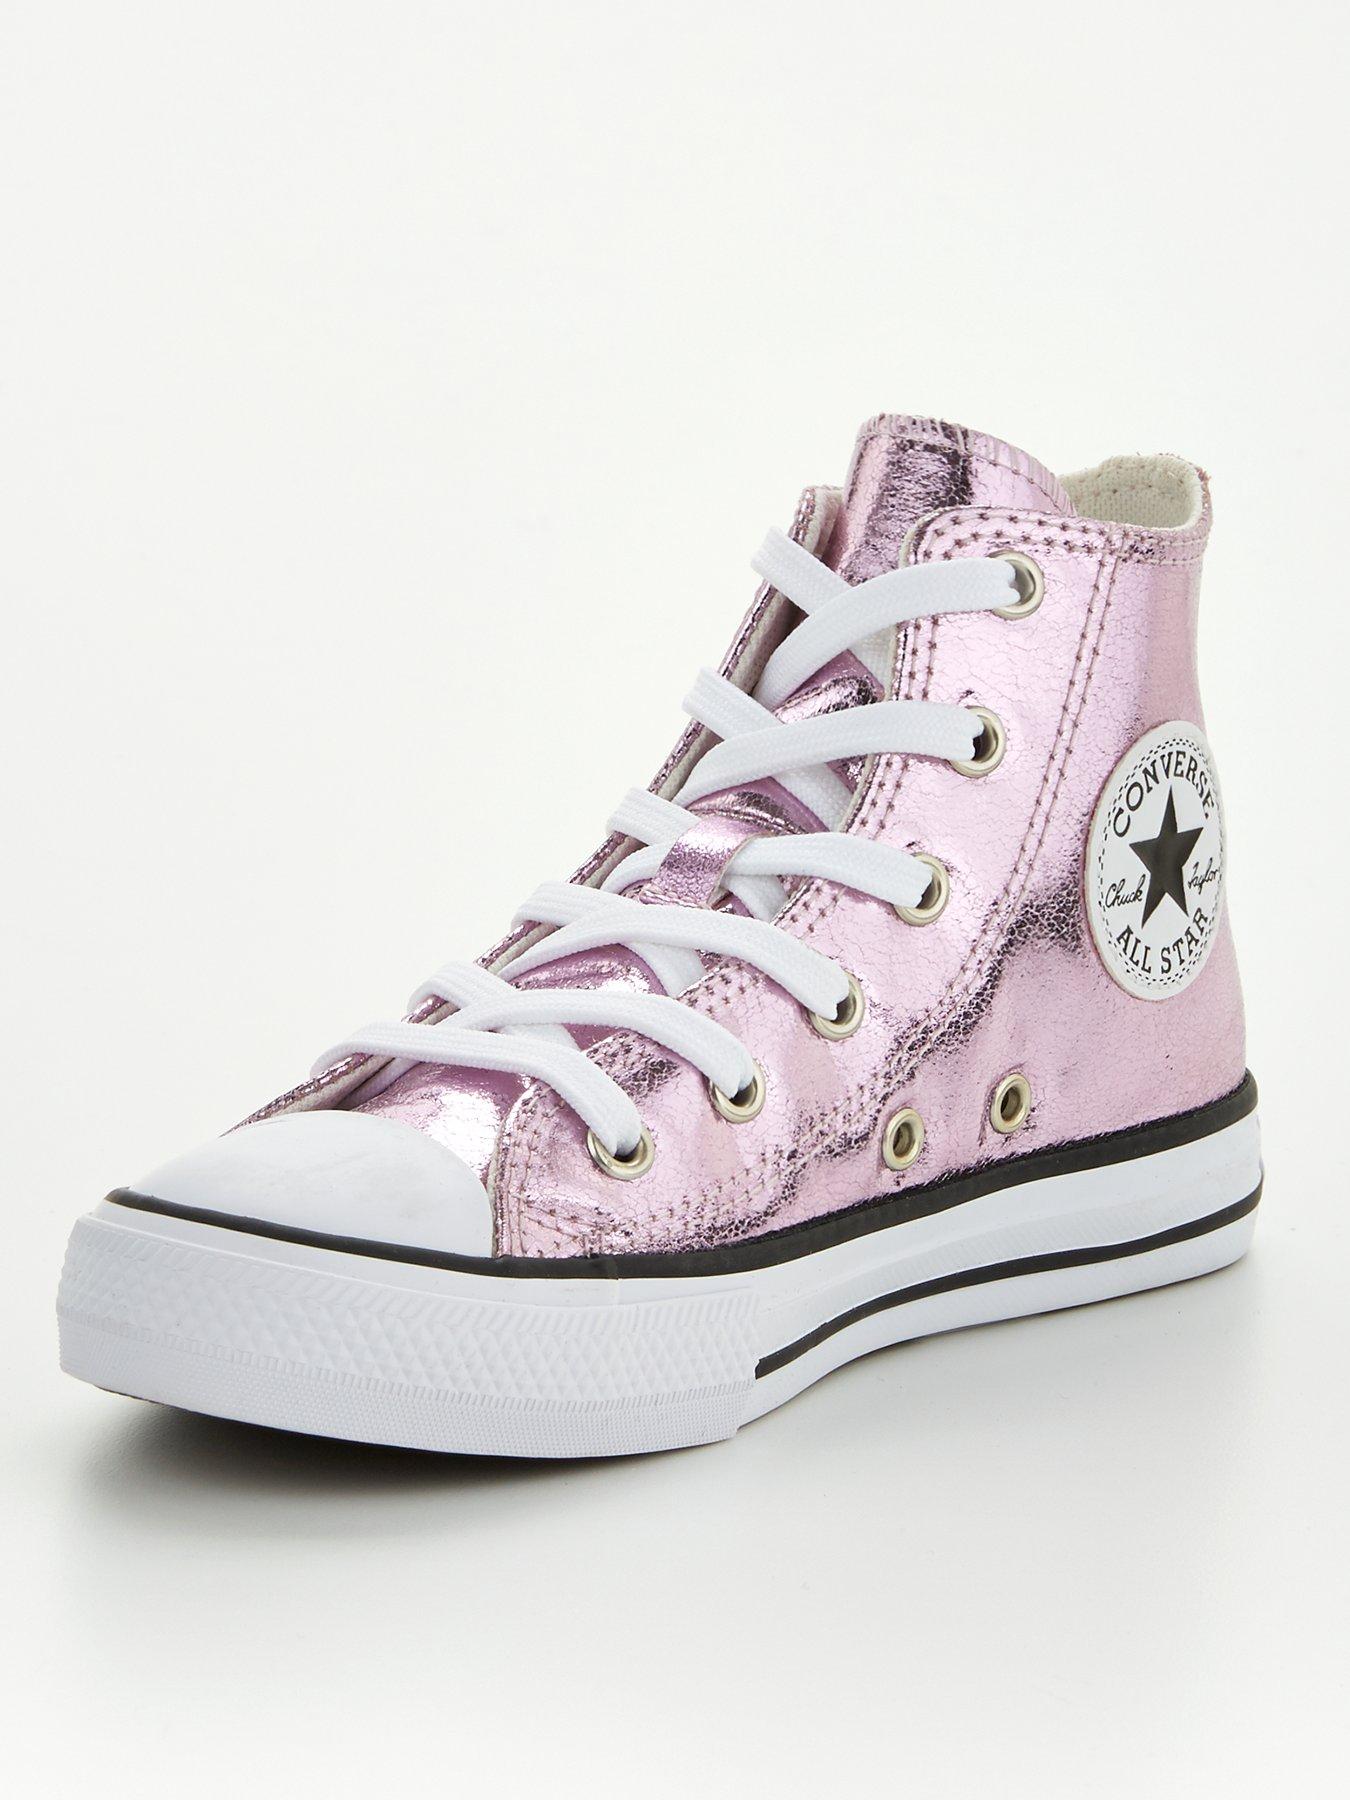 5 | Converse | Junior footwear (sizes 3 